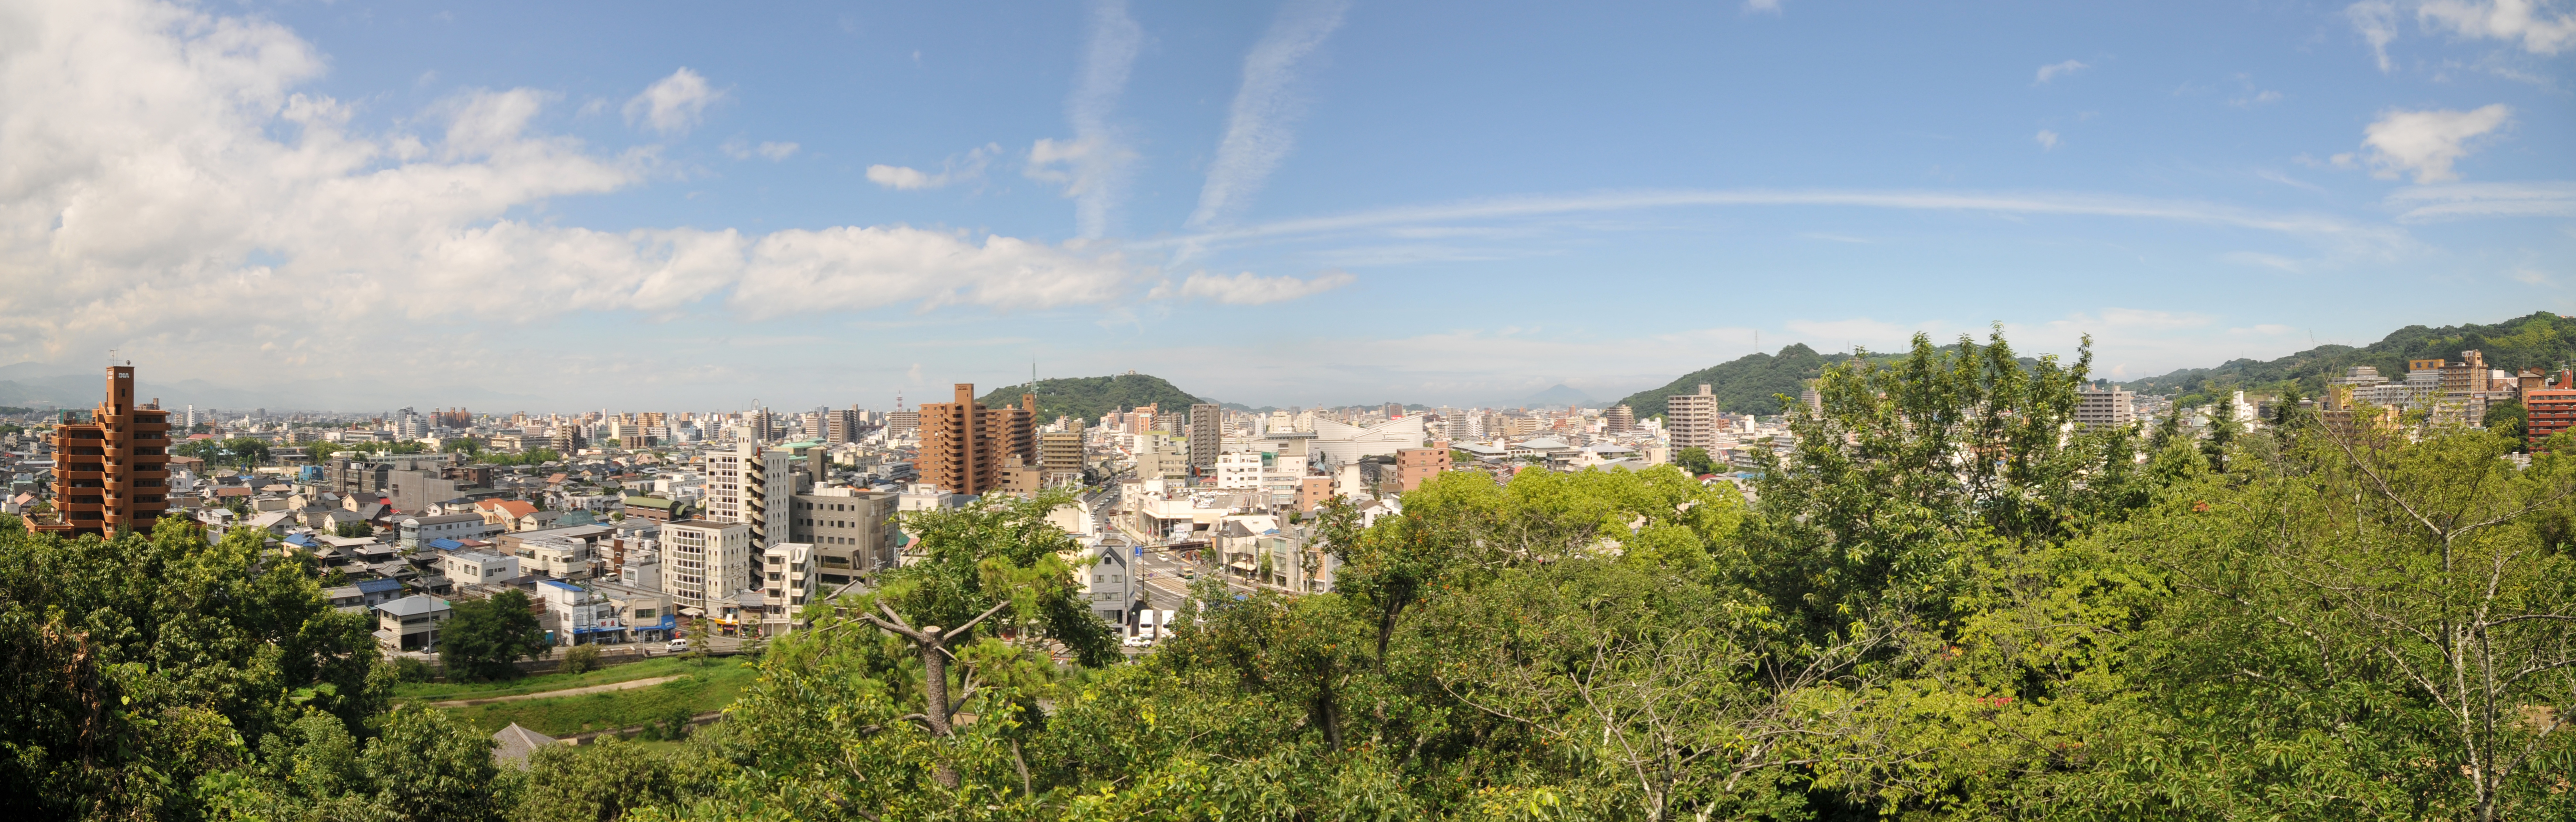 File:Matsuyama city panoramic view.jpg - Wikimedia Commons